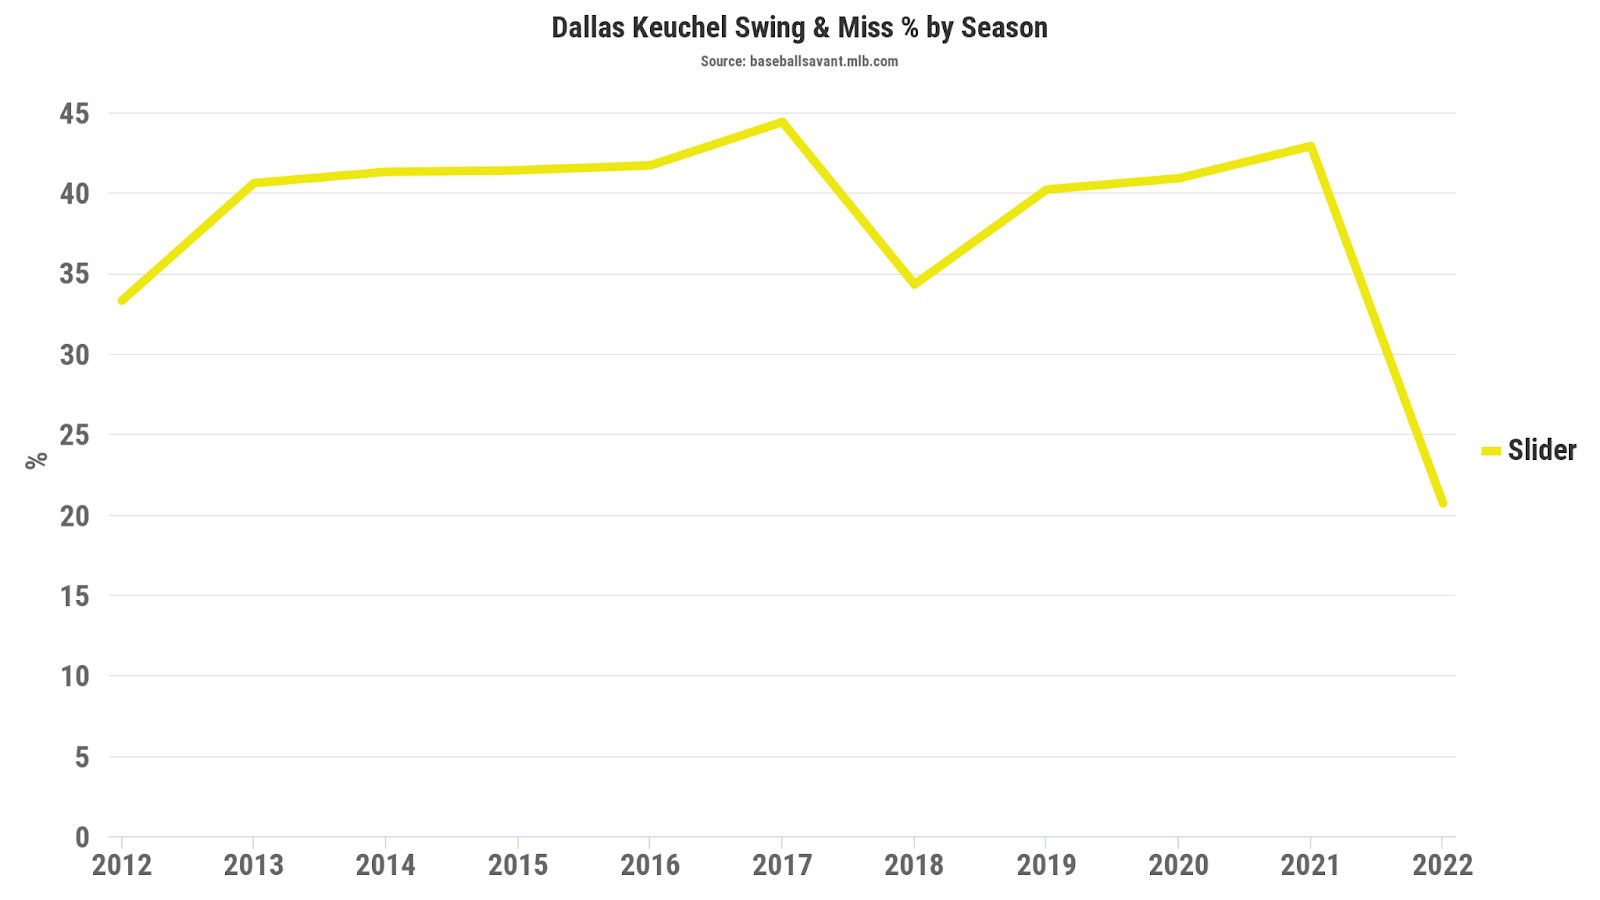 Dallas Keuchel's swing and miss percent by season on his slider.